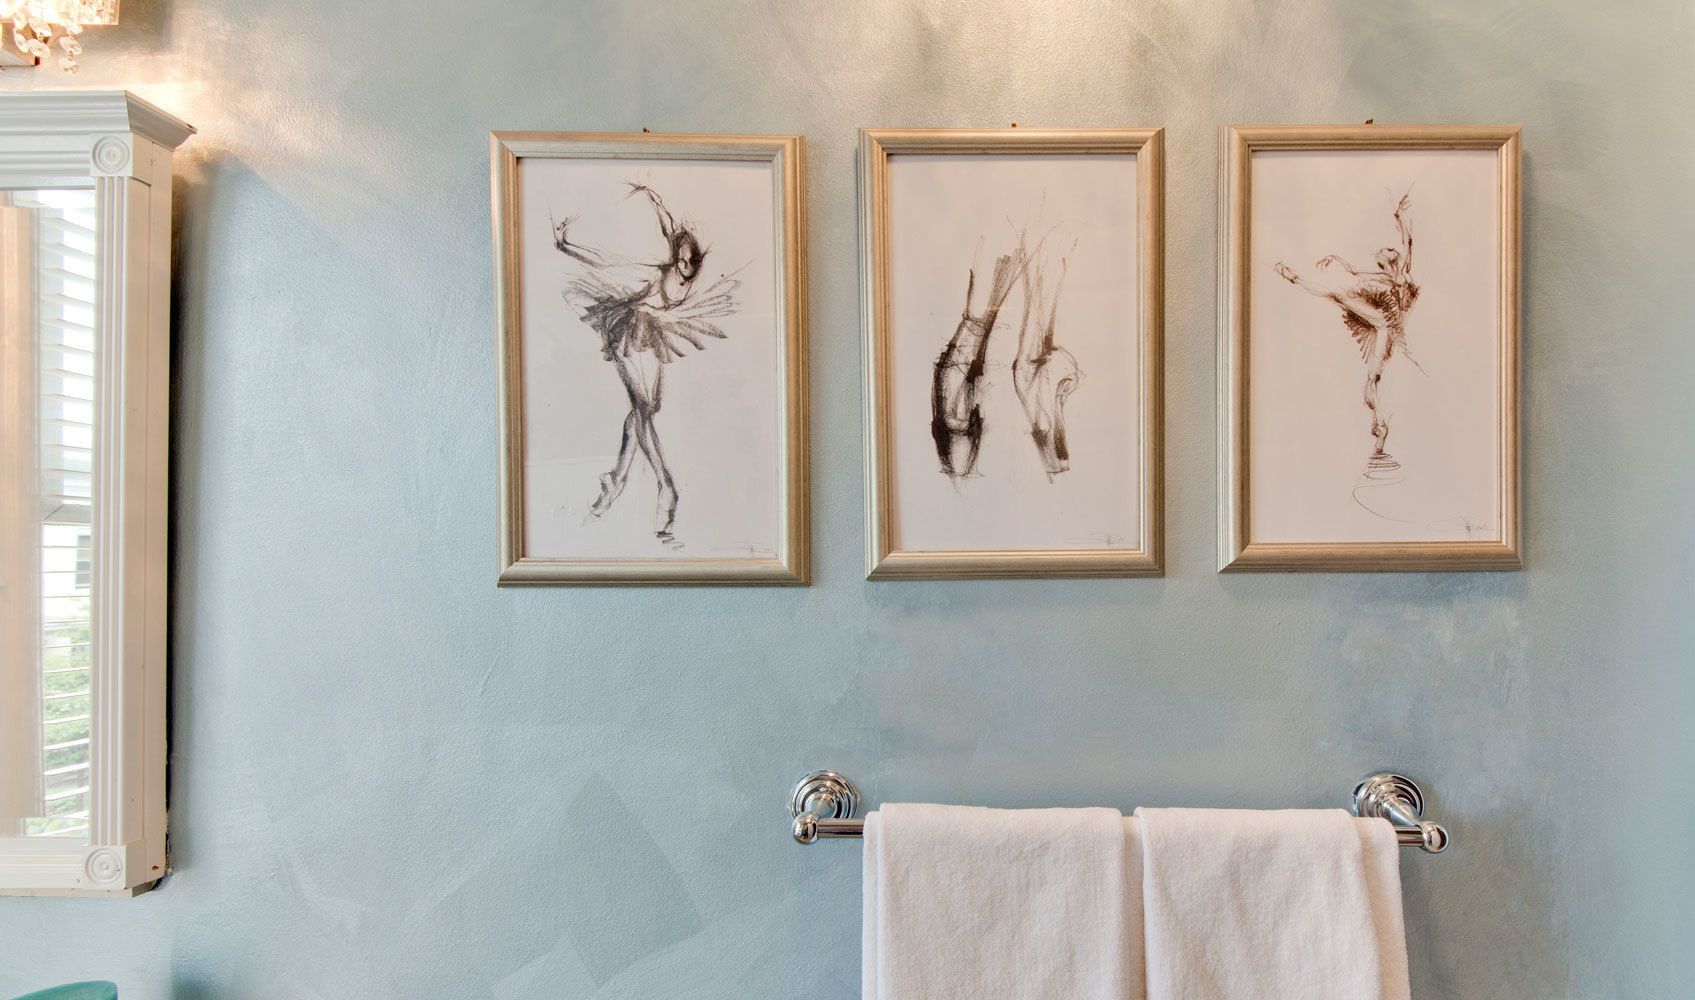 Bathroom Art Ideas: 10 Ways To Use Art In A Bathroom